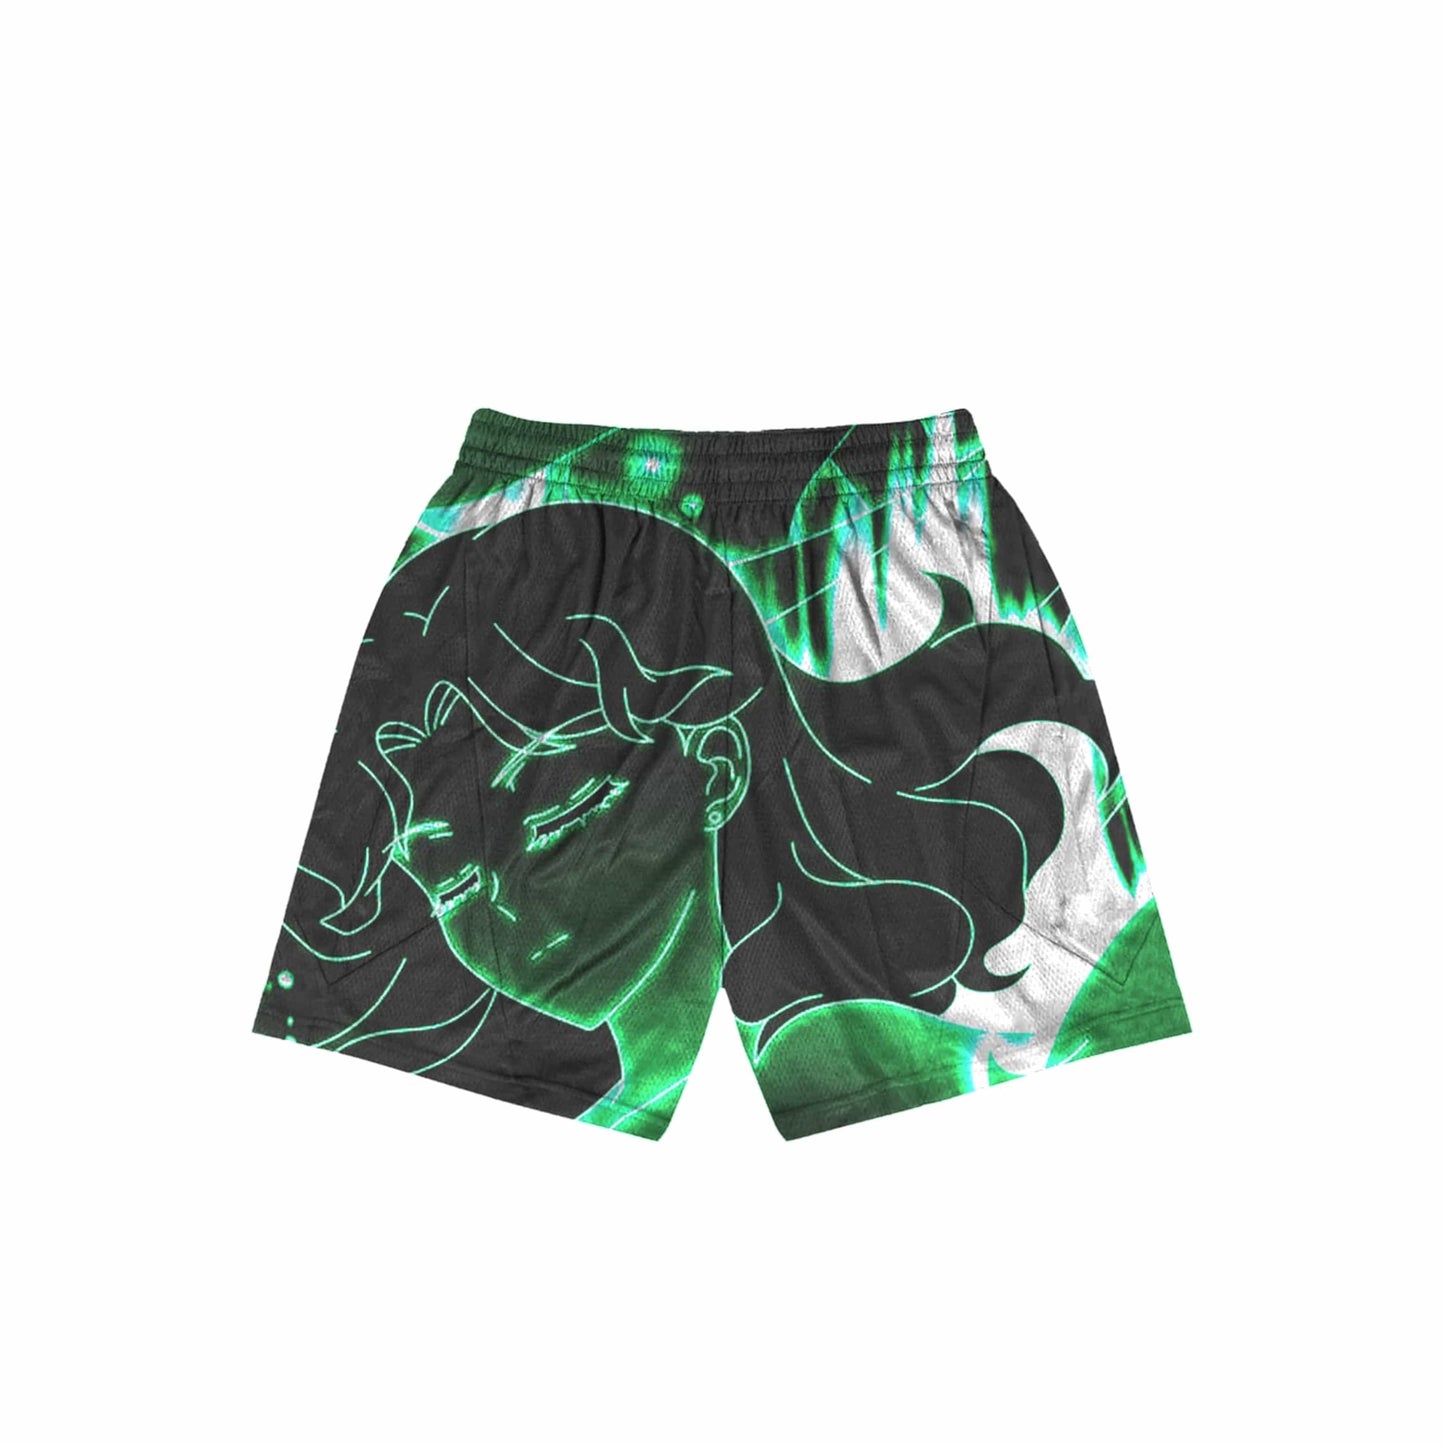 “Sailor Moon” Neon Green Mesh Shorts